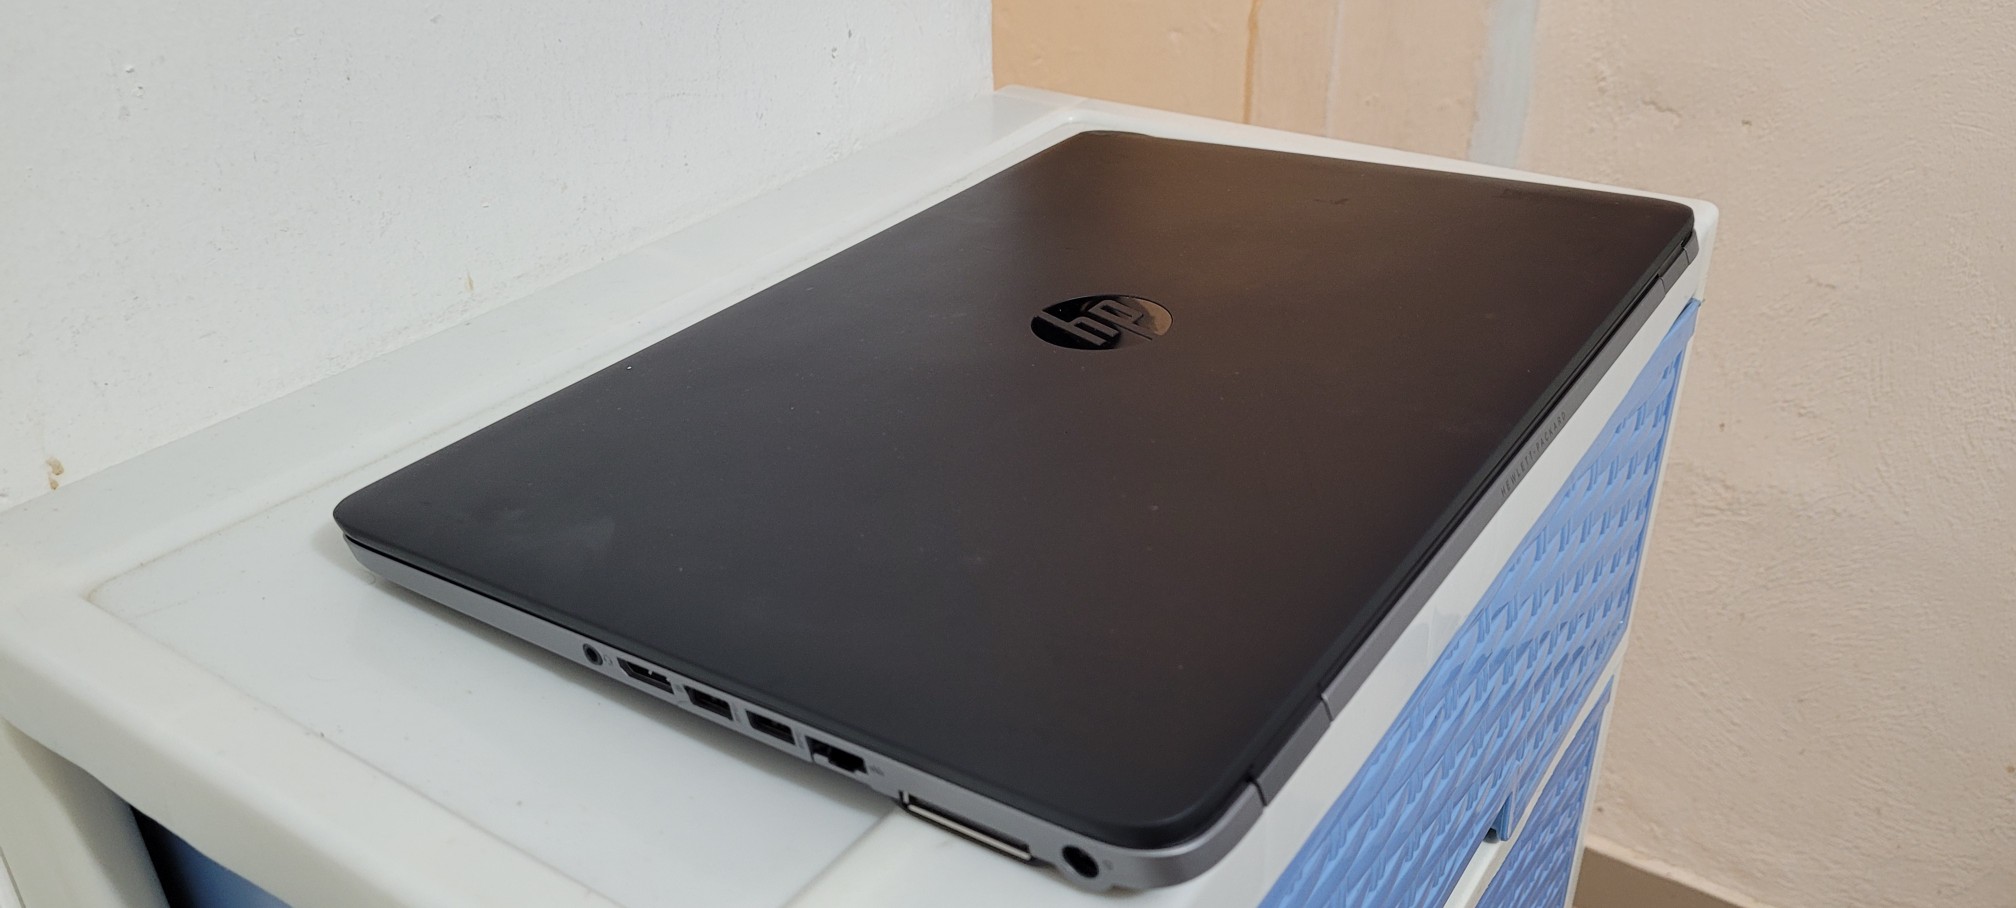 computadoras y laptops - hp Elitebook 17 Pulg Core i5 Ram 8gb  Disco 256gb SSD Solido full 1080p 2